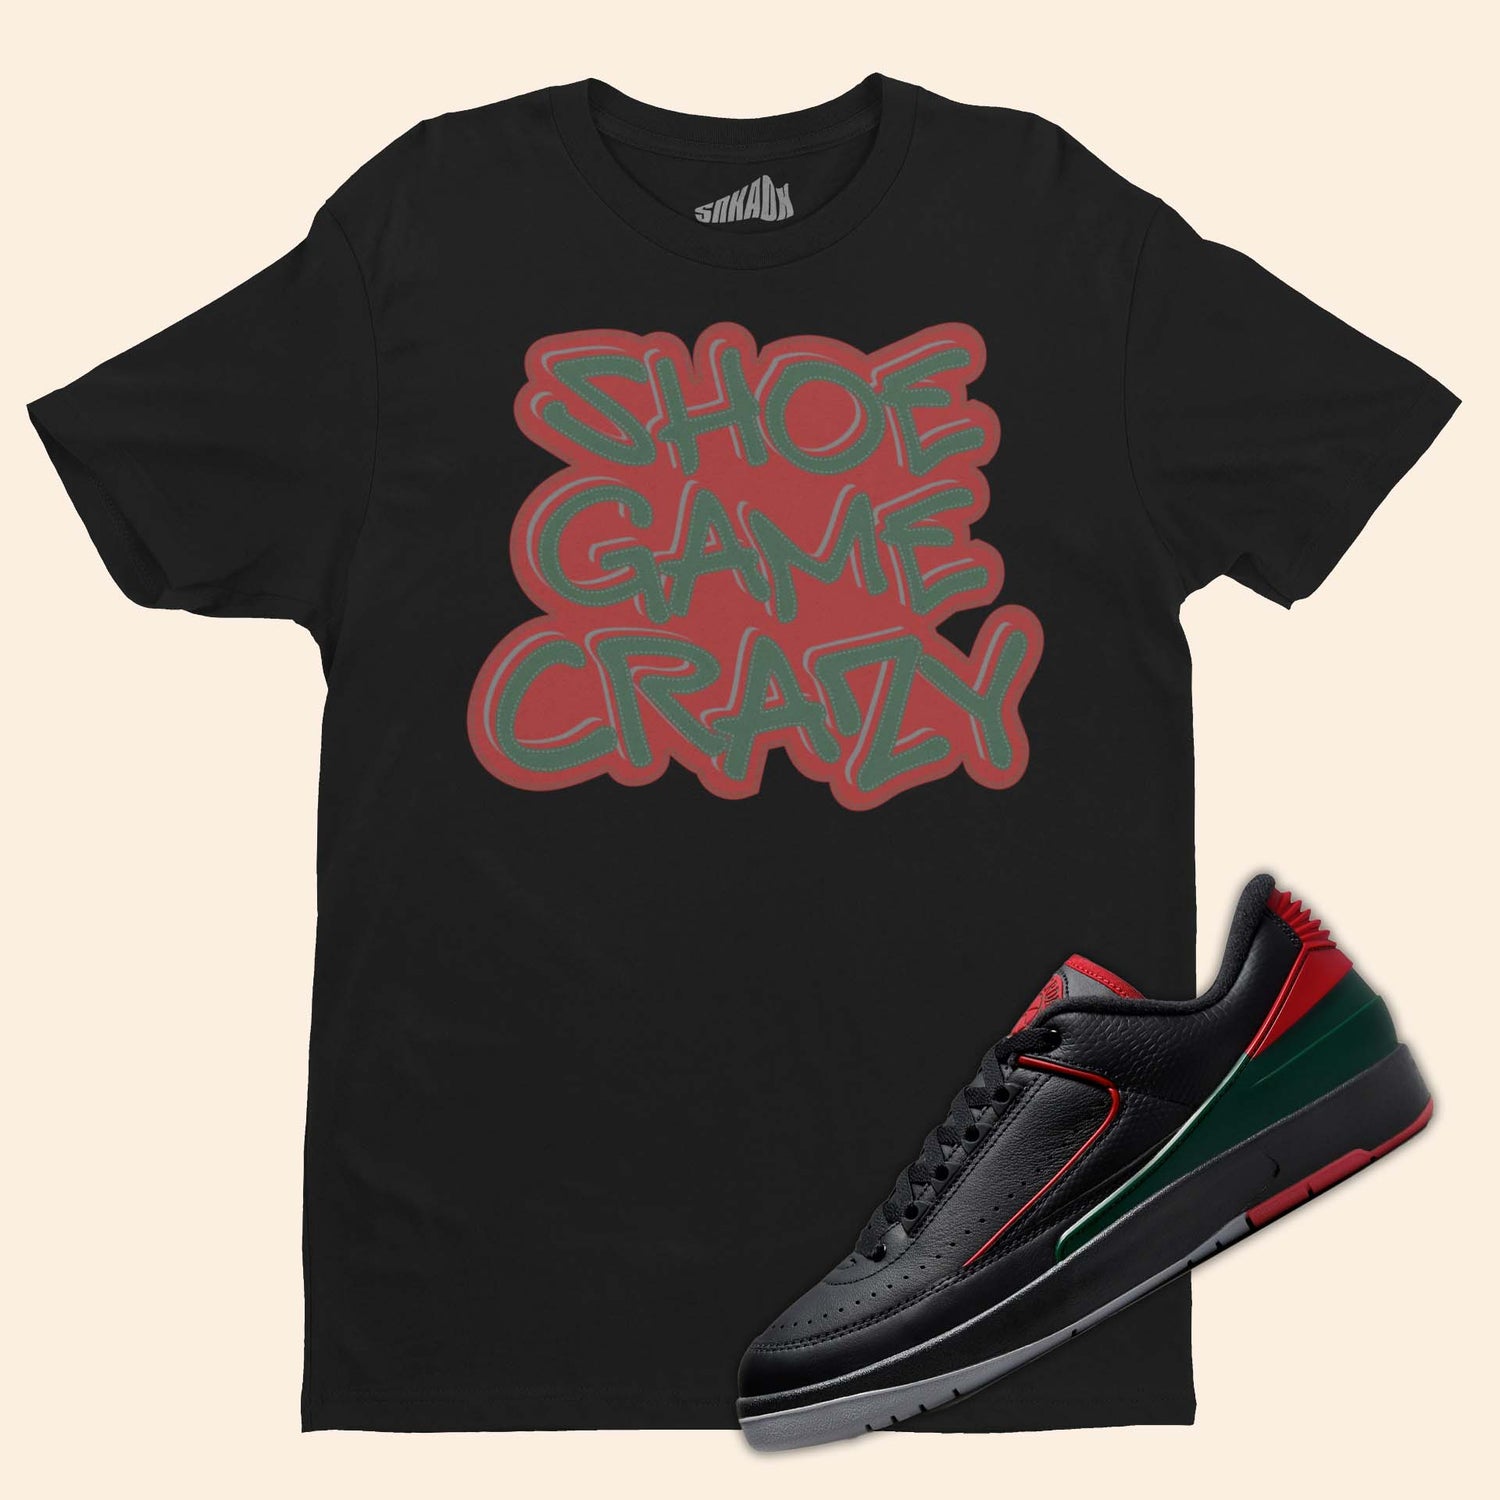 Shoe Game Crazy T-Shirt Matching Air Jordan 2 Low Christmas